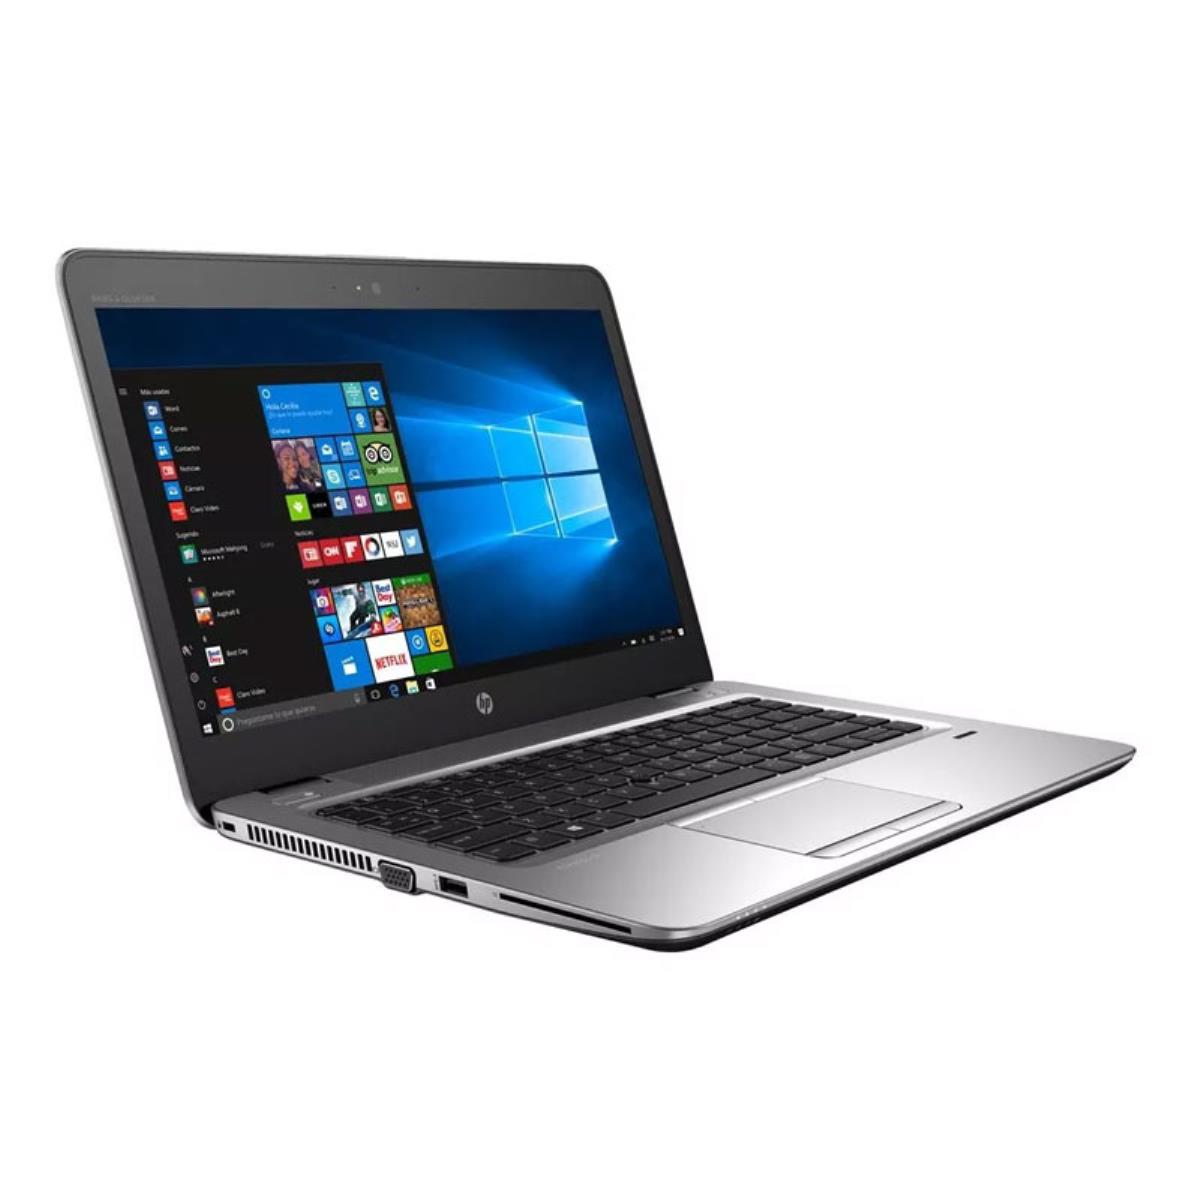 Portátil HP Elitebook 840 G3 GRADO B (Intel Core i5 6300u 2.4Ghz/8GB/240SSD/14/NO-DVD/W8P) Preinstalado